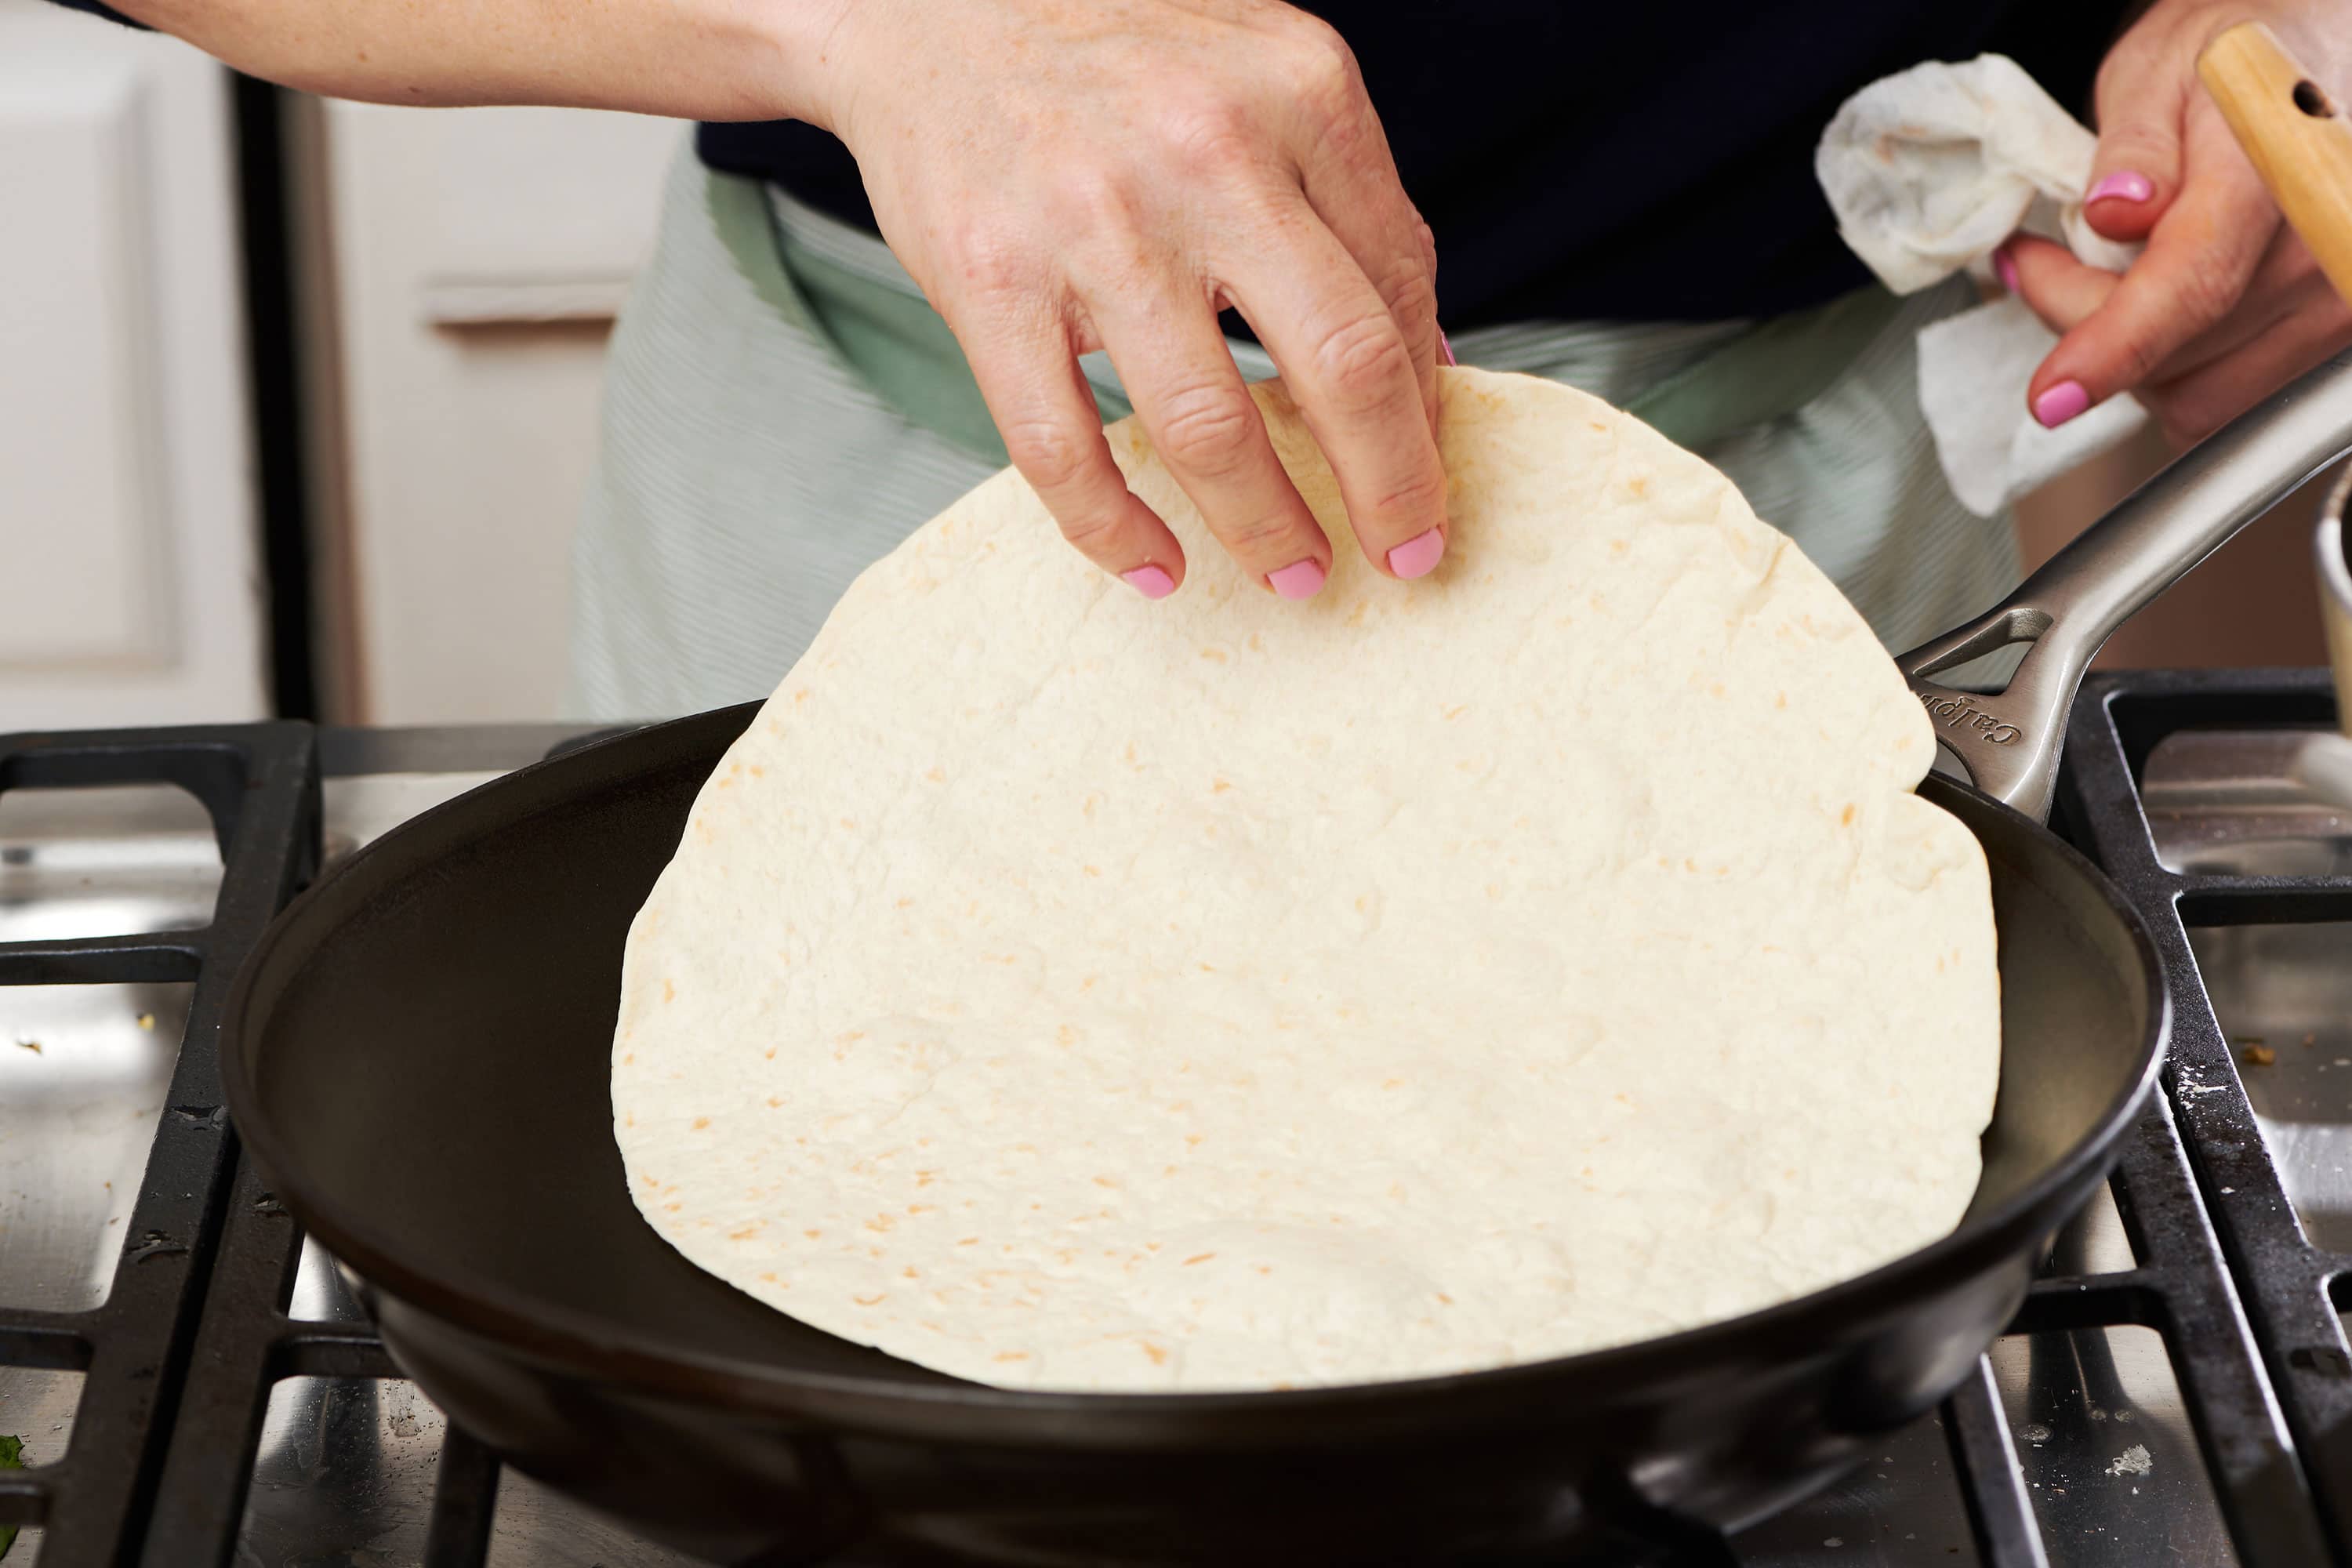 Placing tortilla in hot pan.